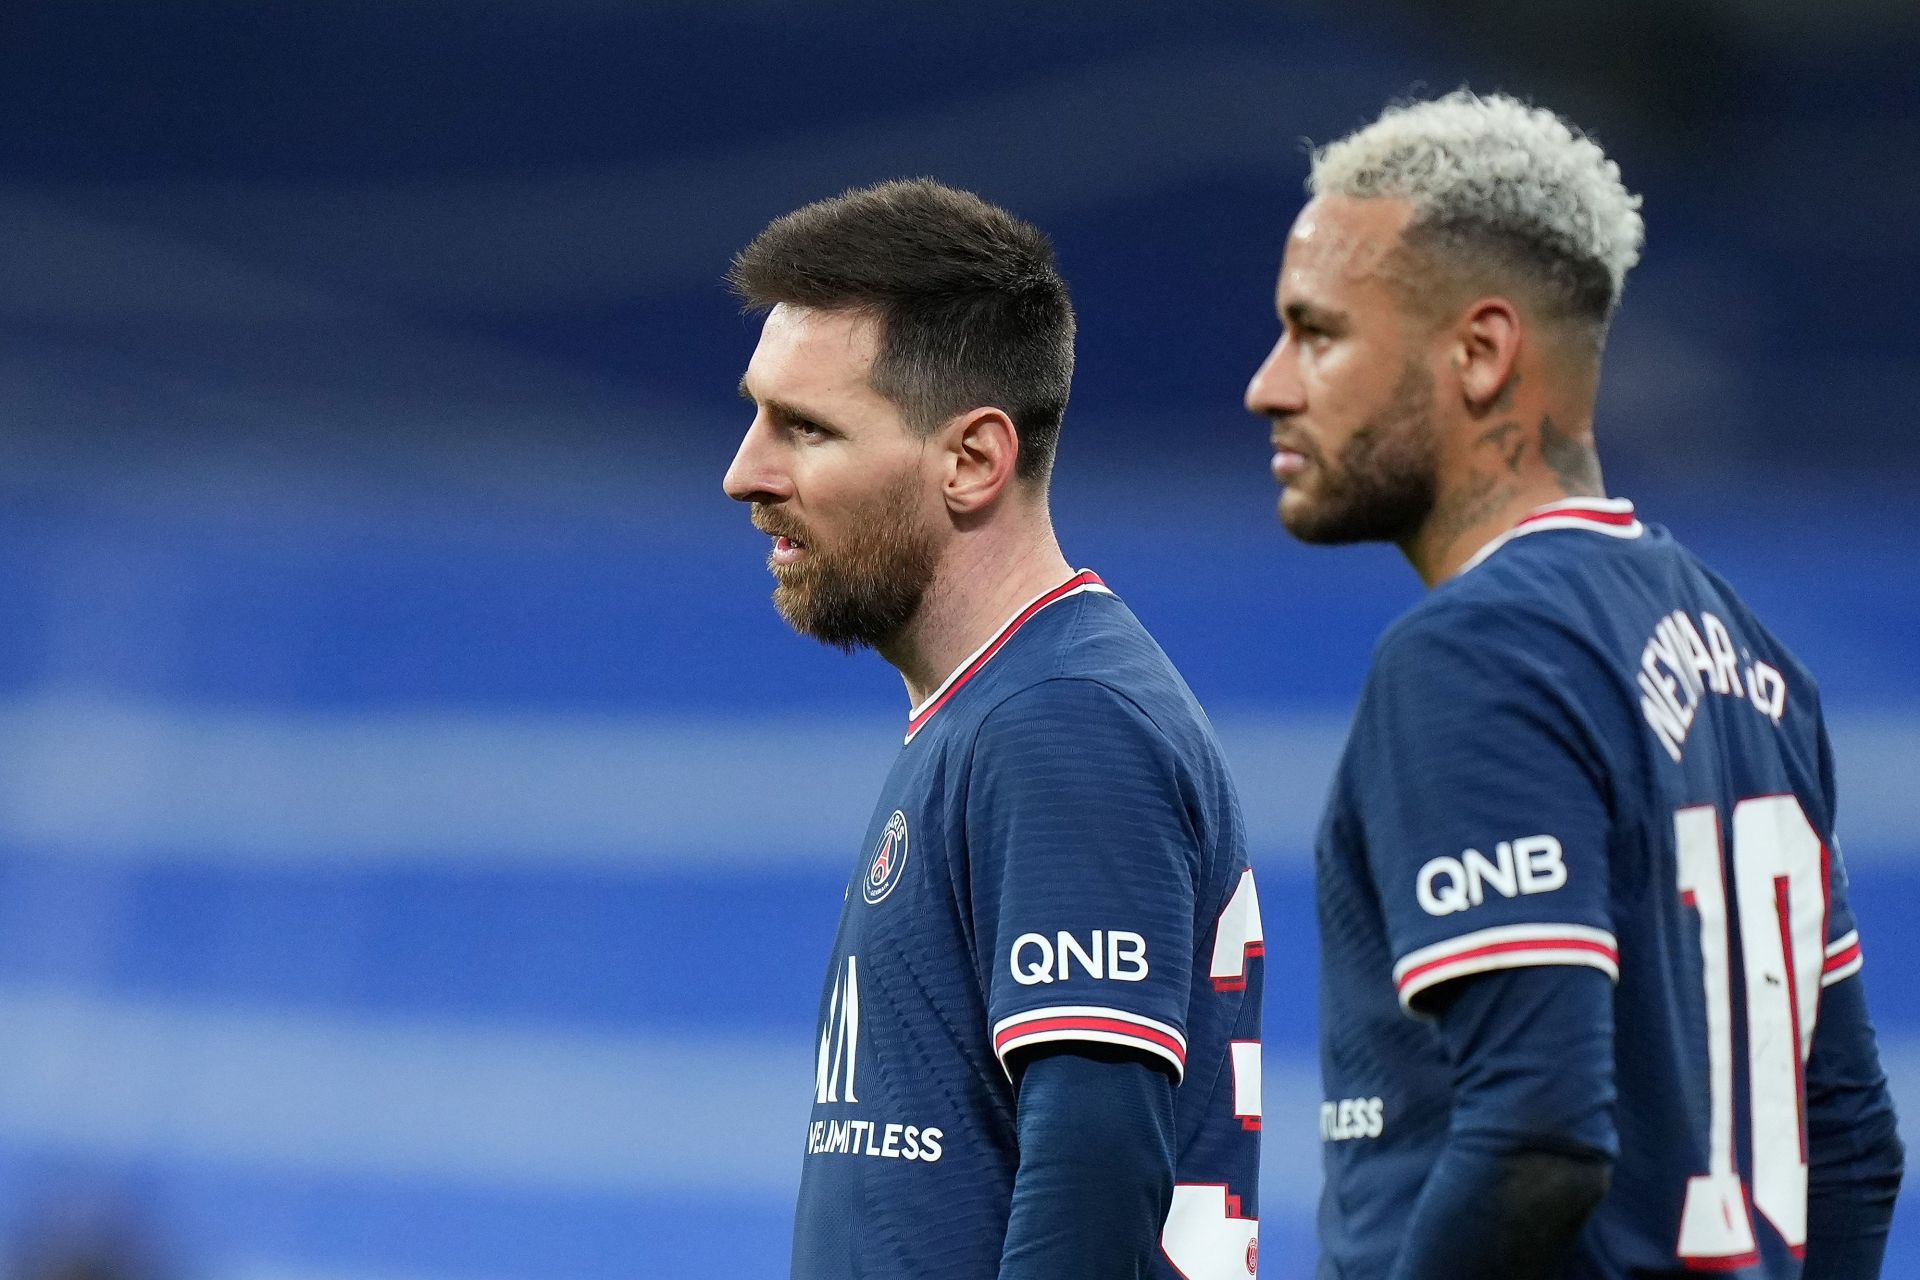 Lionel Messi and Neymar Jr. of Paris Saint-Germain